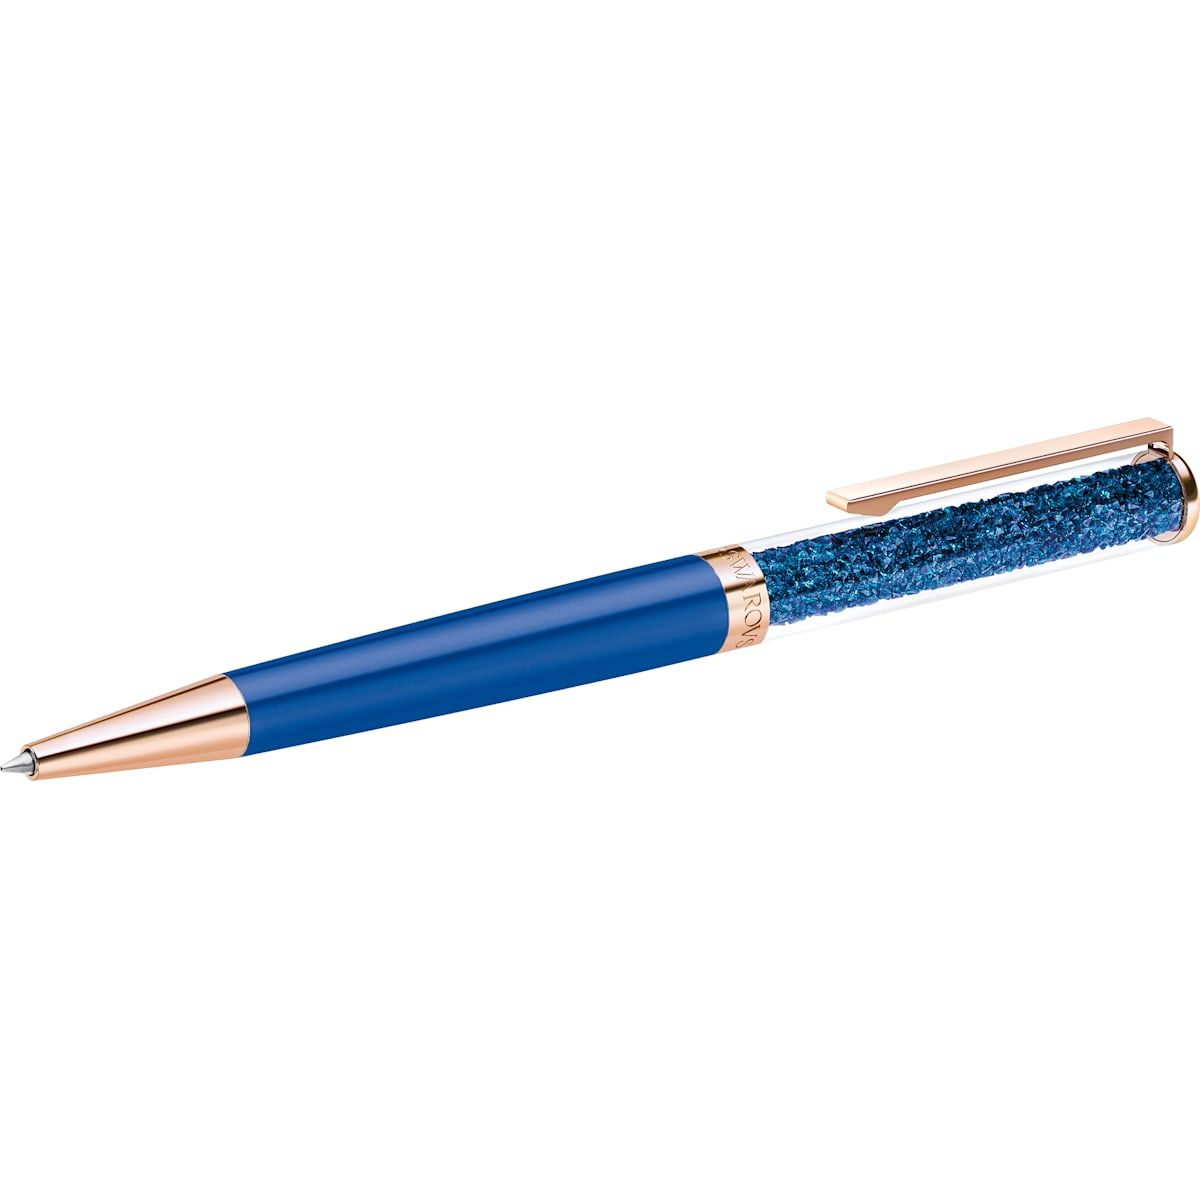 Swarovski Crystal Pen in Blue and Rose